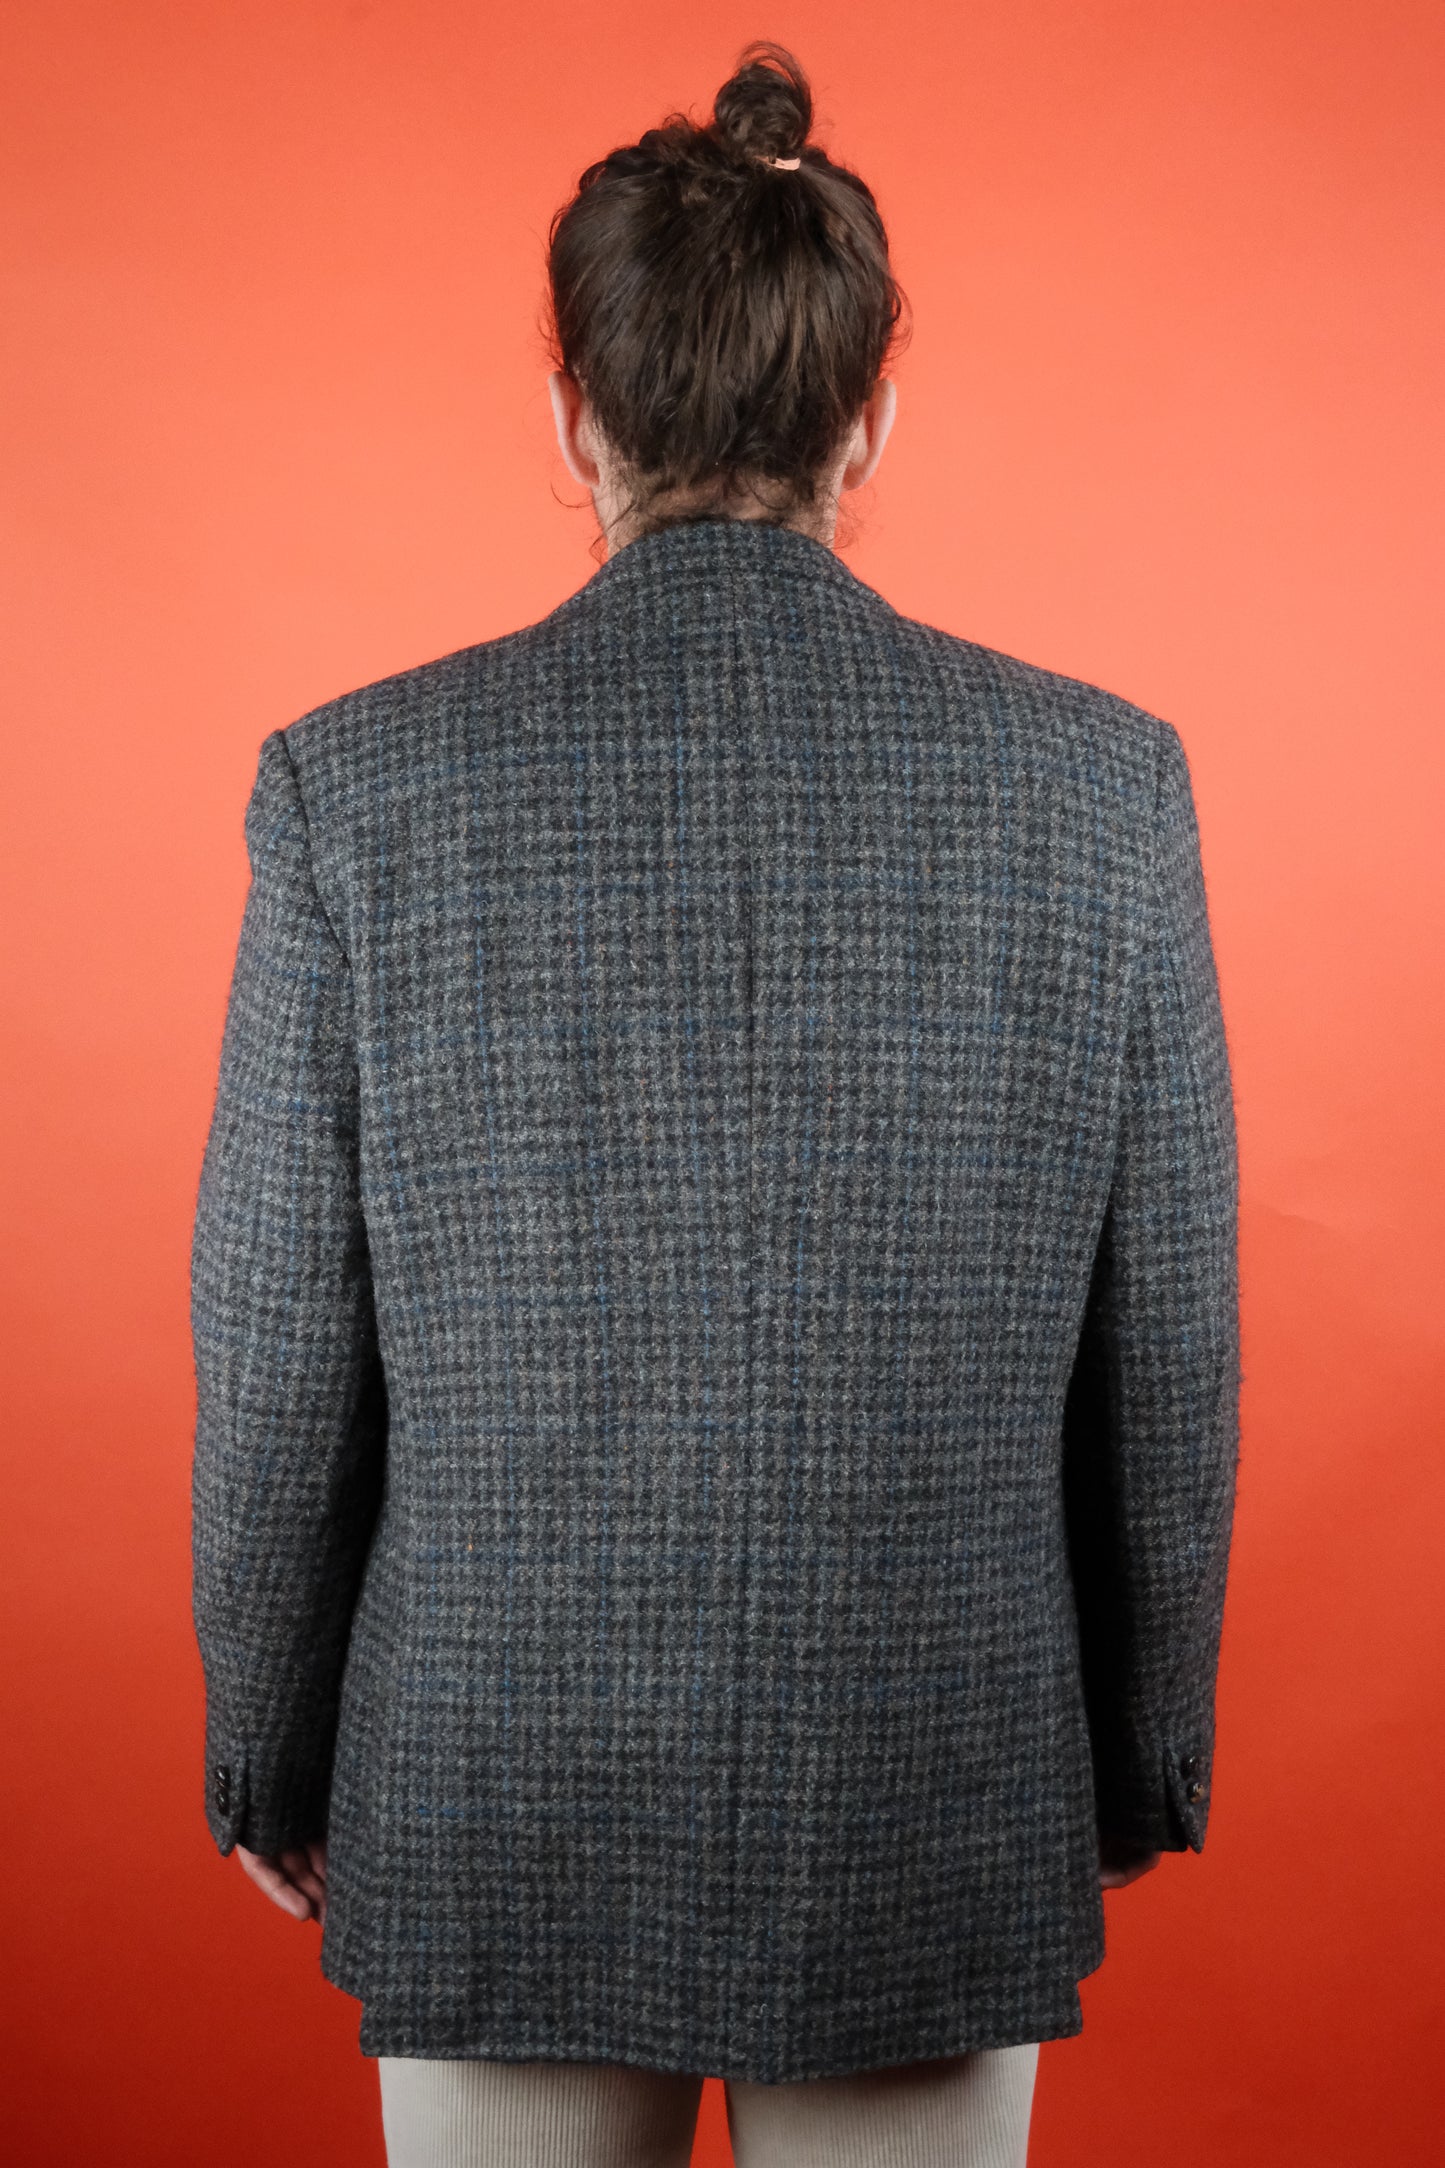 Harrods Harris Tweed Wool Blazer '46R' - vintage clothing clochard92.com